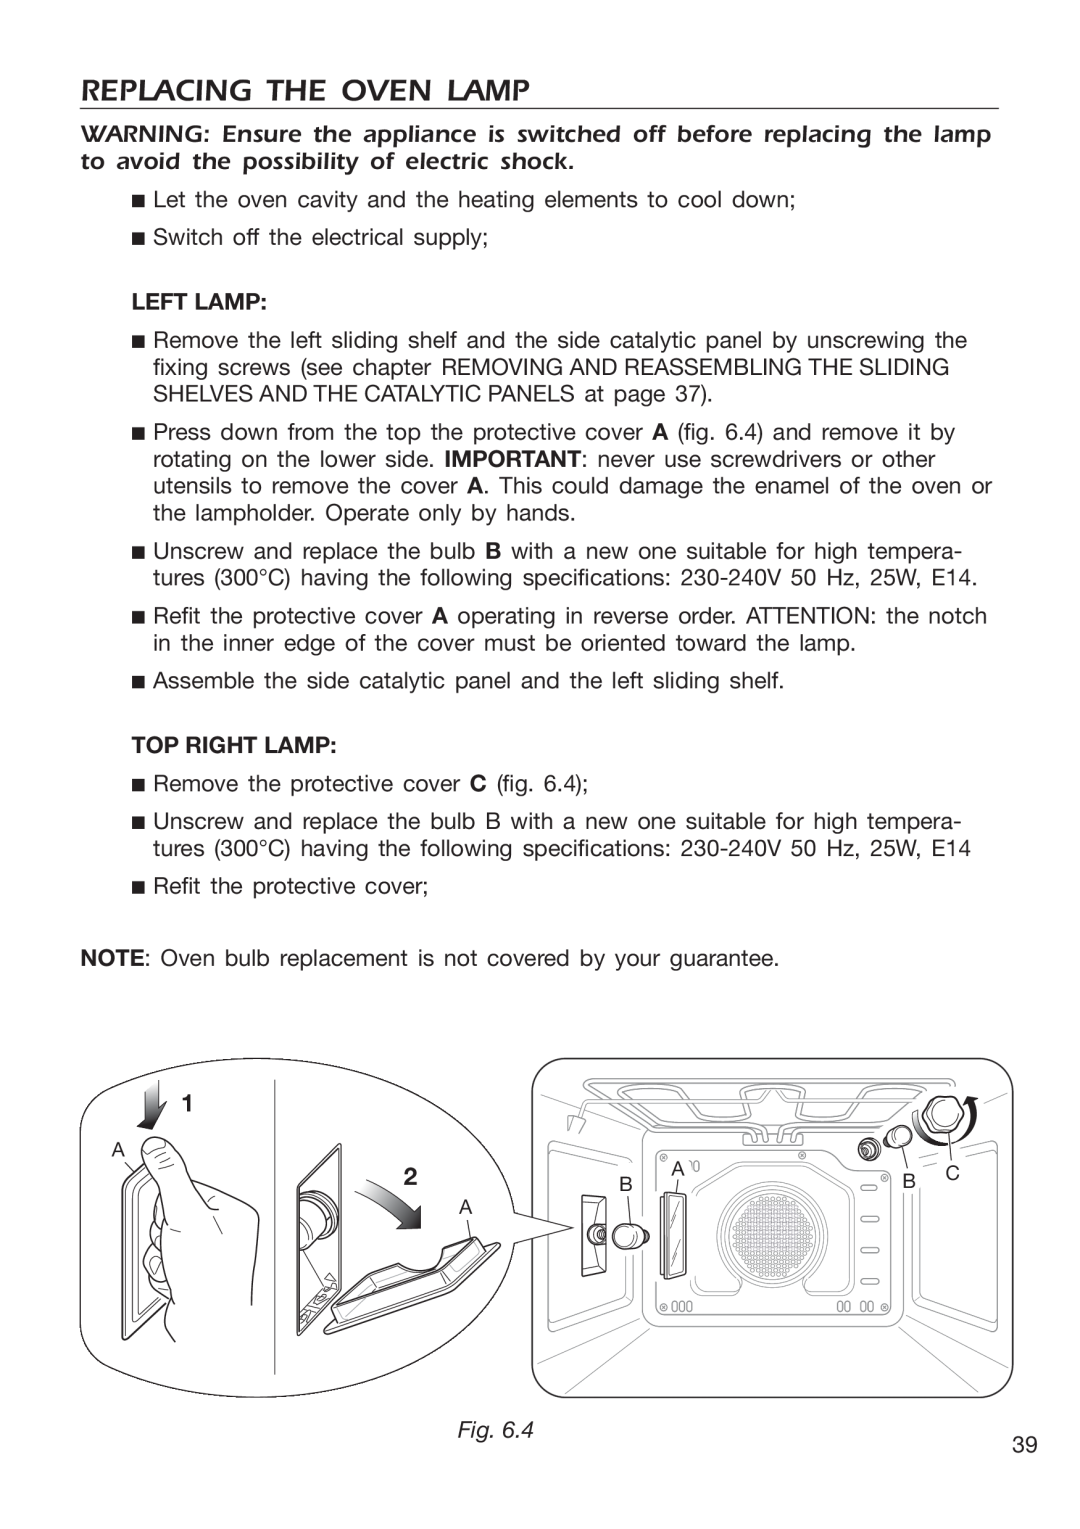 DeLonghi EMFPS 60 B manual Replacing The Oven Lamp, Left Lamp, Top Right Lamp 